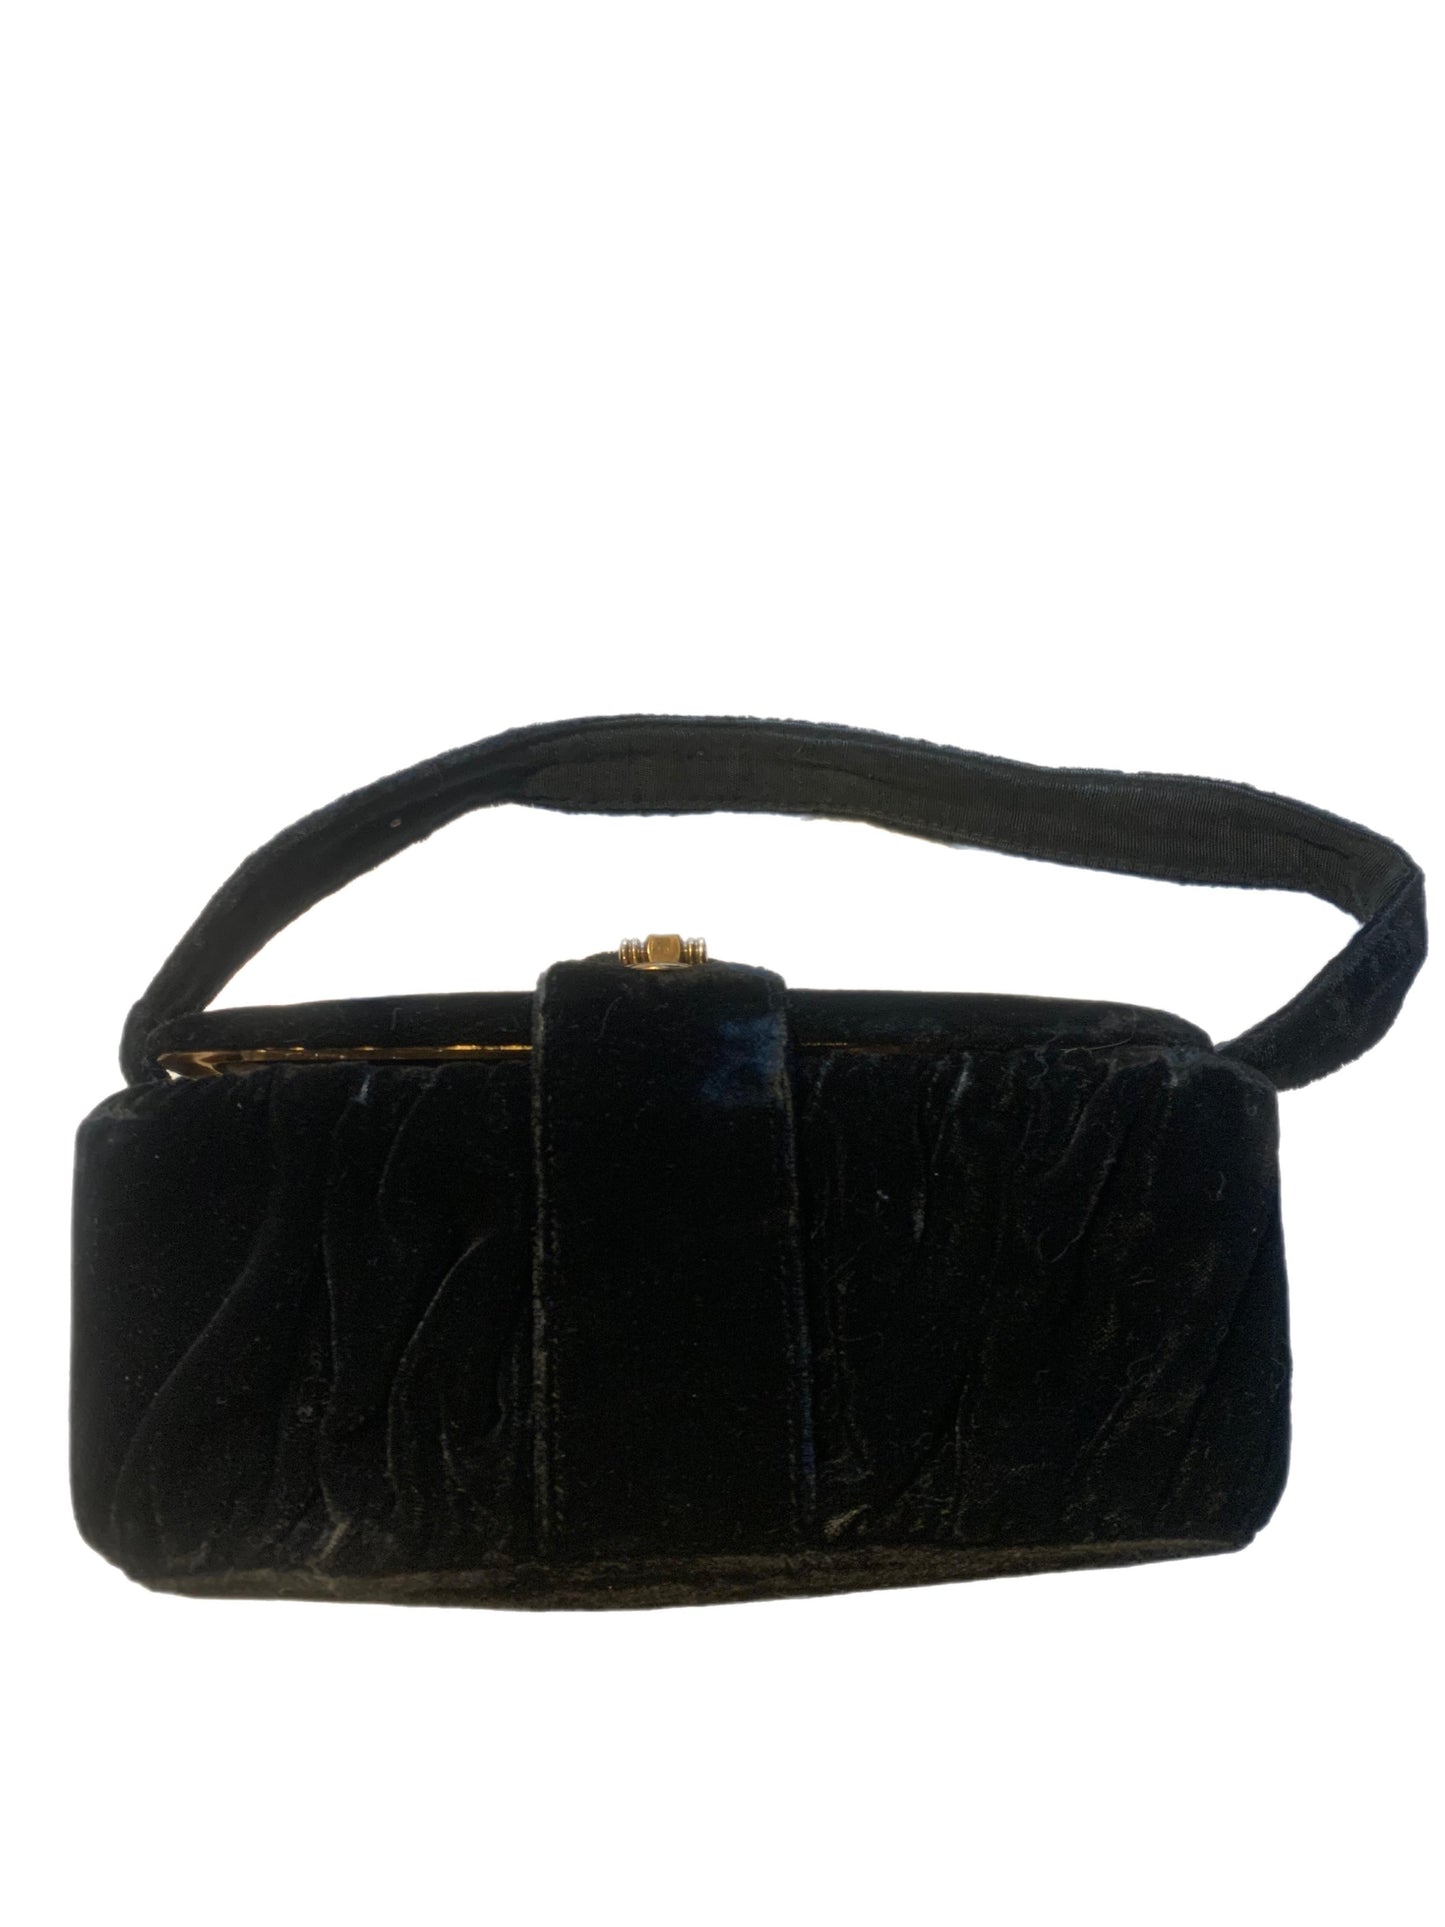 Black Velvet Soft Side Boxy Evening Handbag circa 1940s